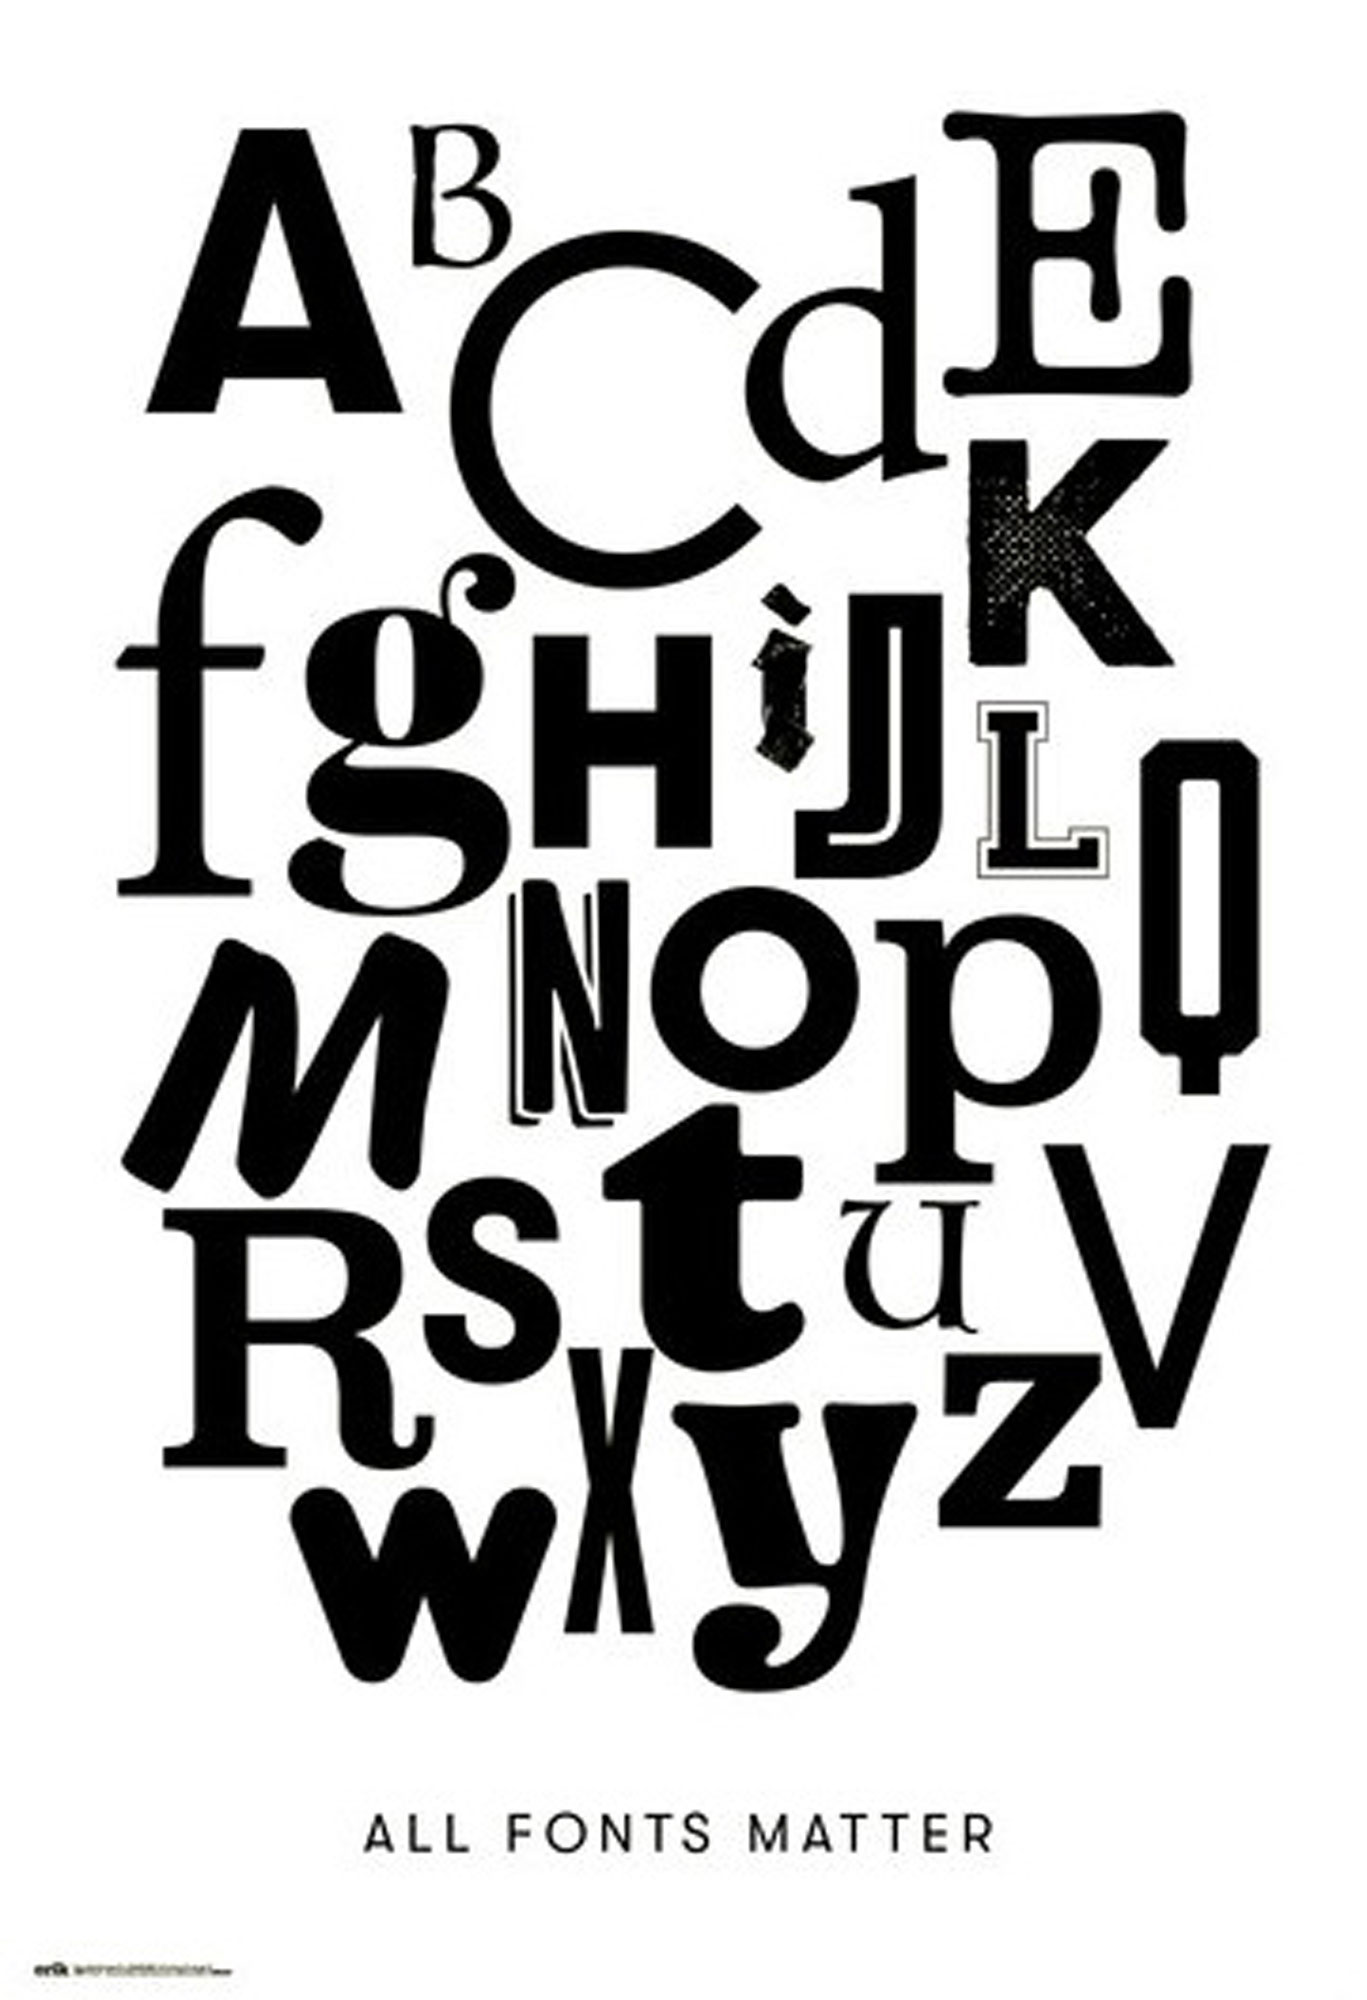 Alphabet - ABC